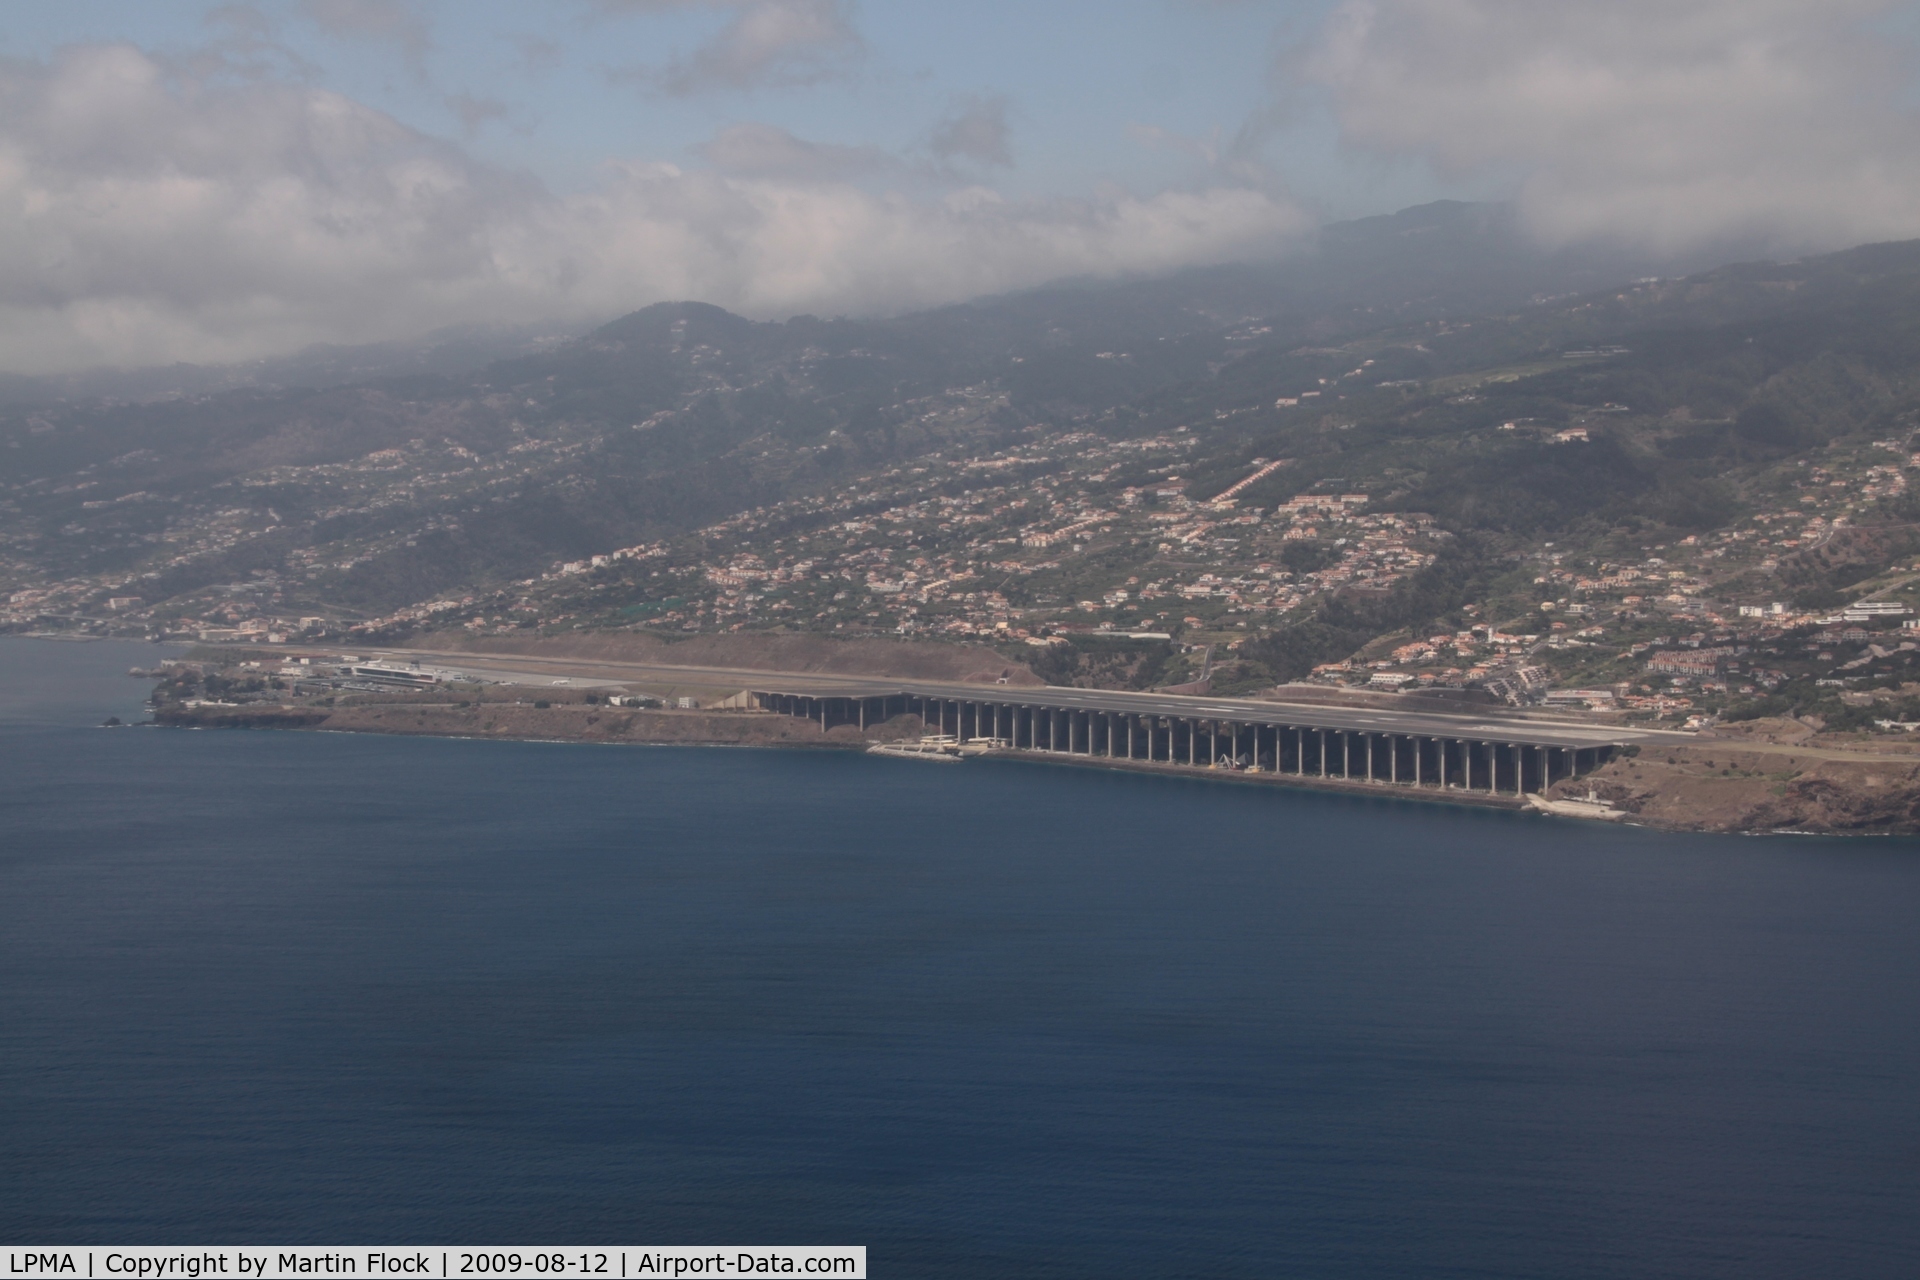 Madeira Airport (Funchal Airport), Funchal, Madeira Island Portugal (LPMA) - .